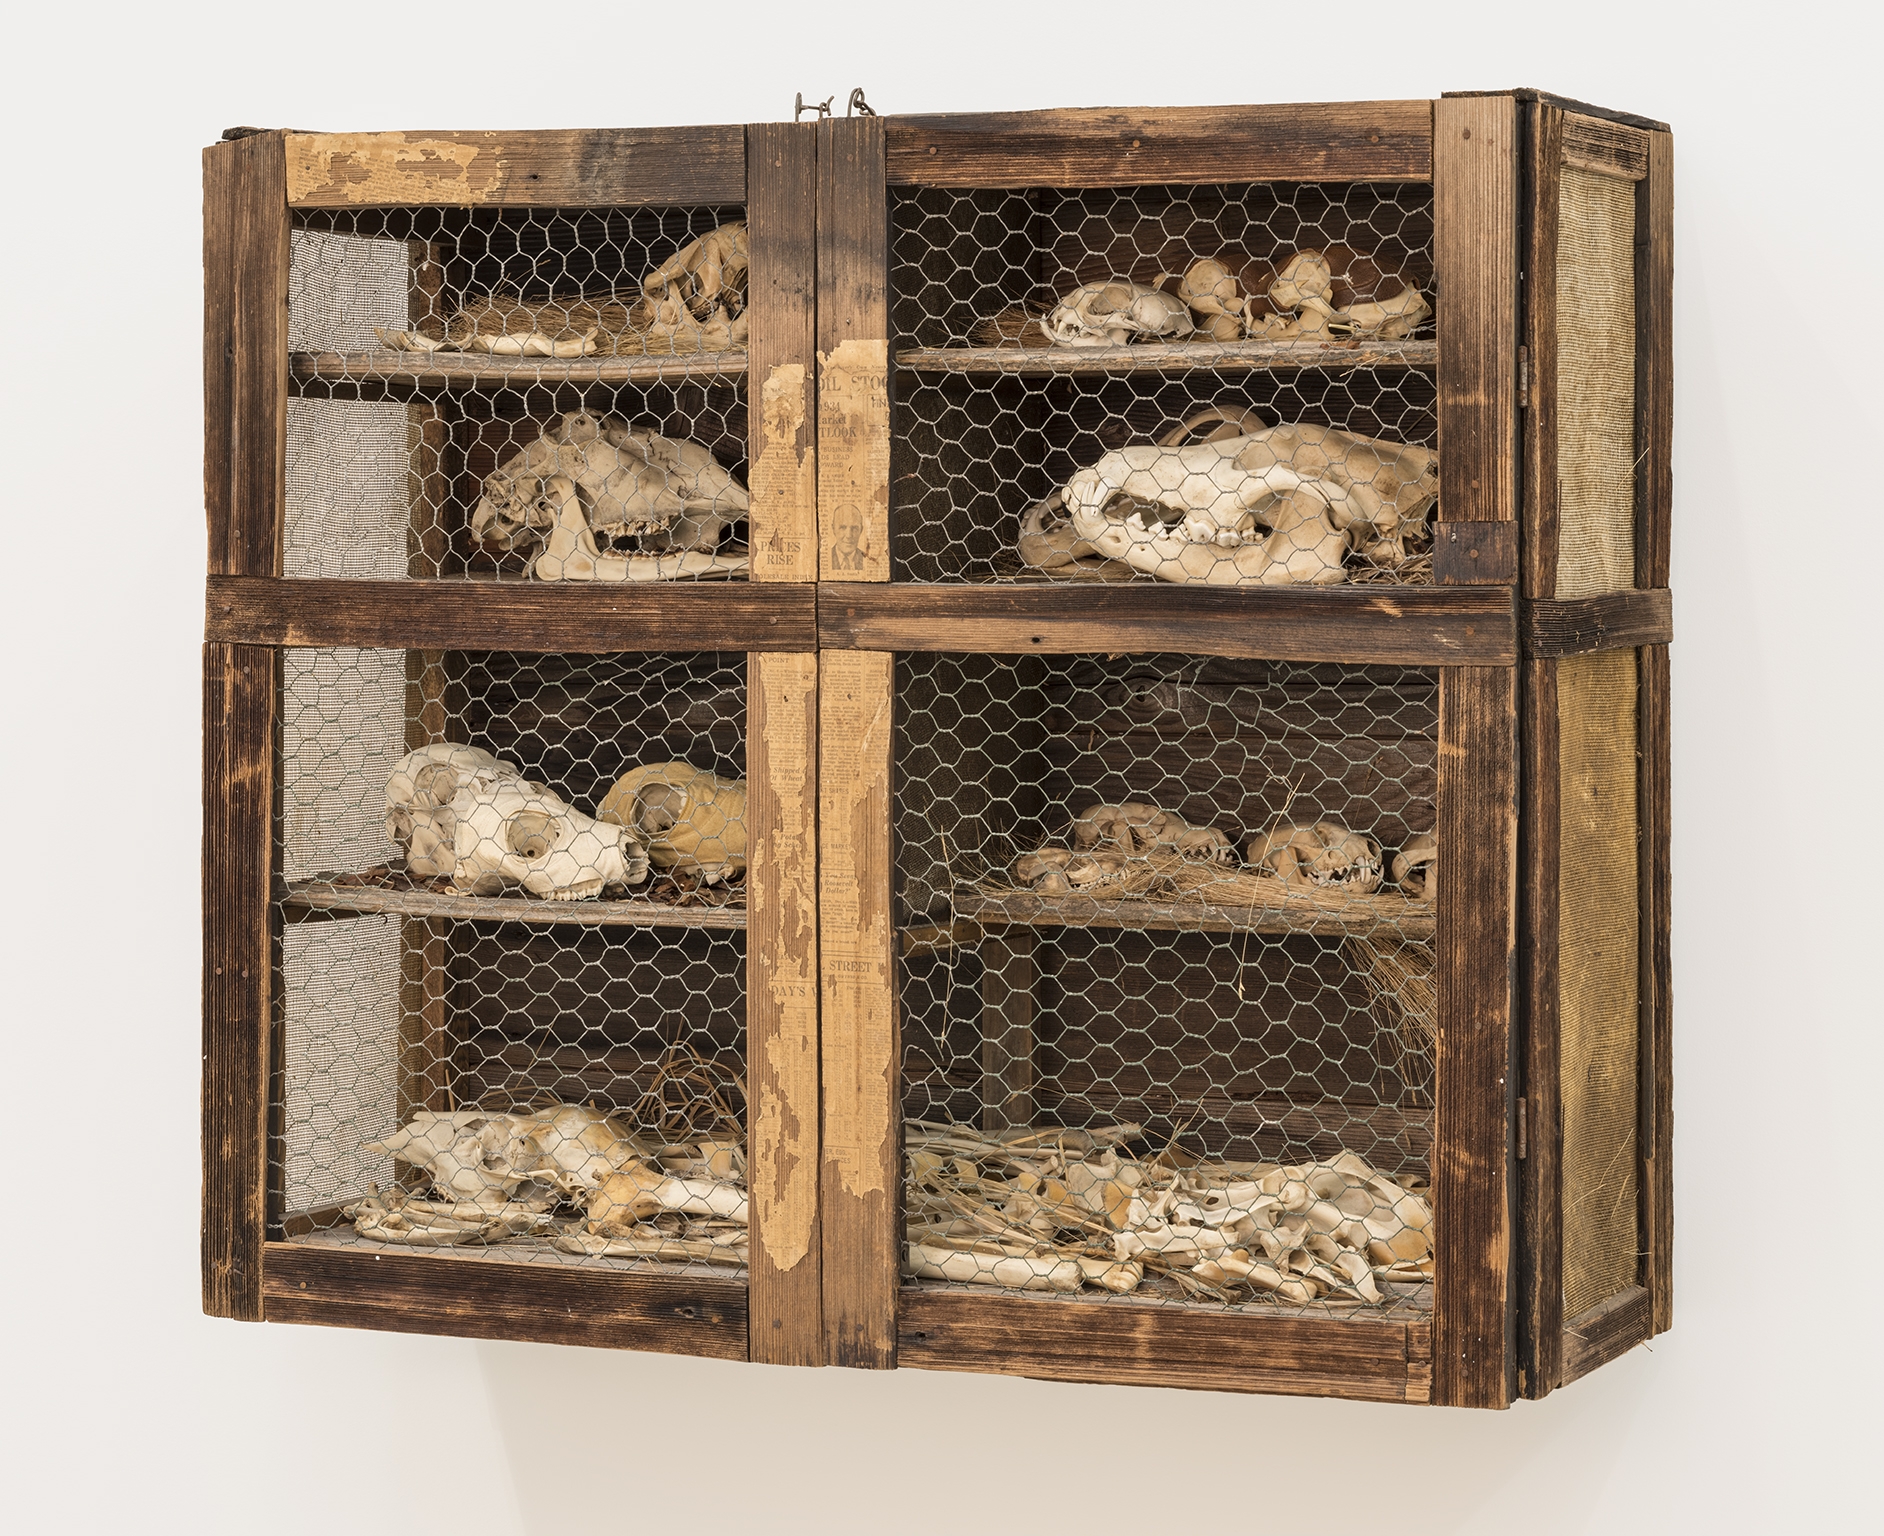 Liz Magor, The Hutch, 1976, natural materials, wood, bones, 33 x 38 x 15 in. (84 x 97 x 38 cm)​​ by 